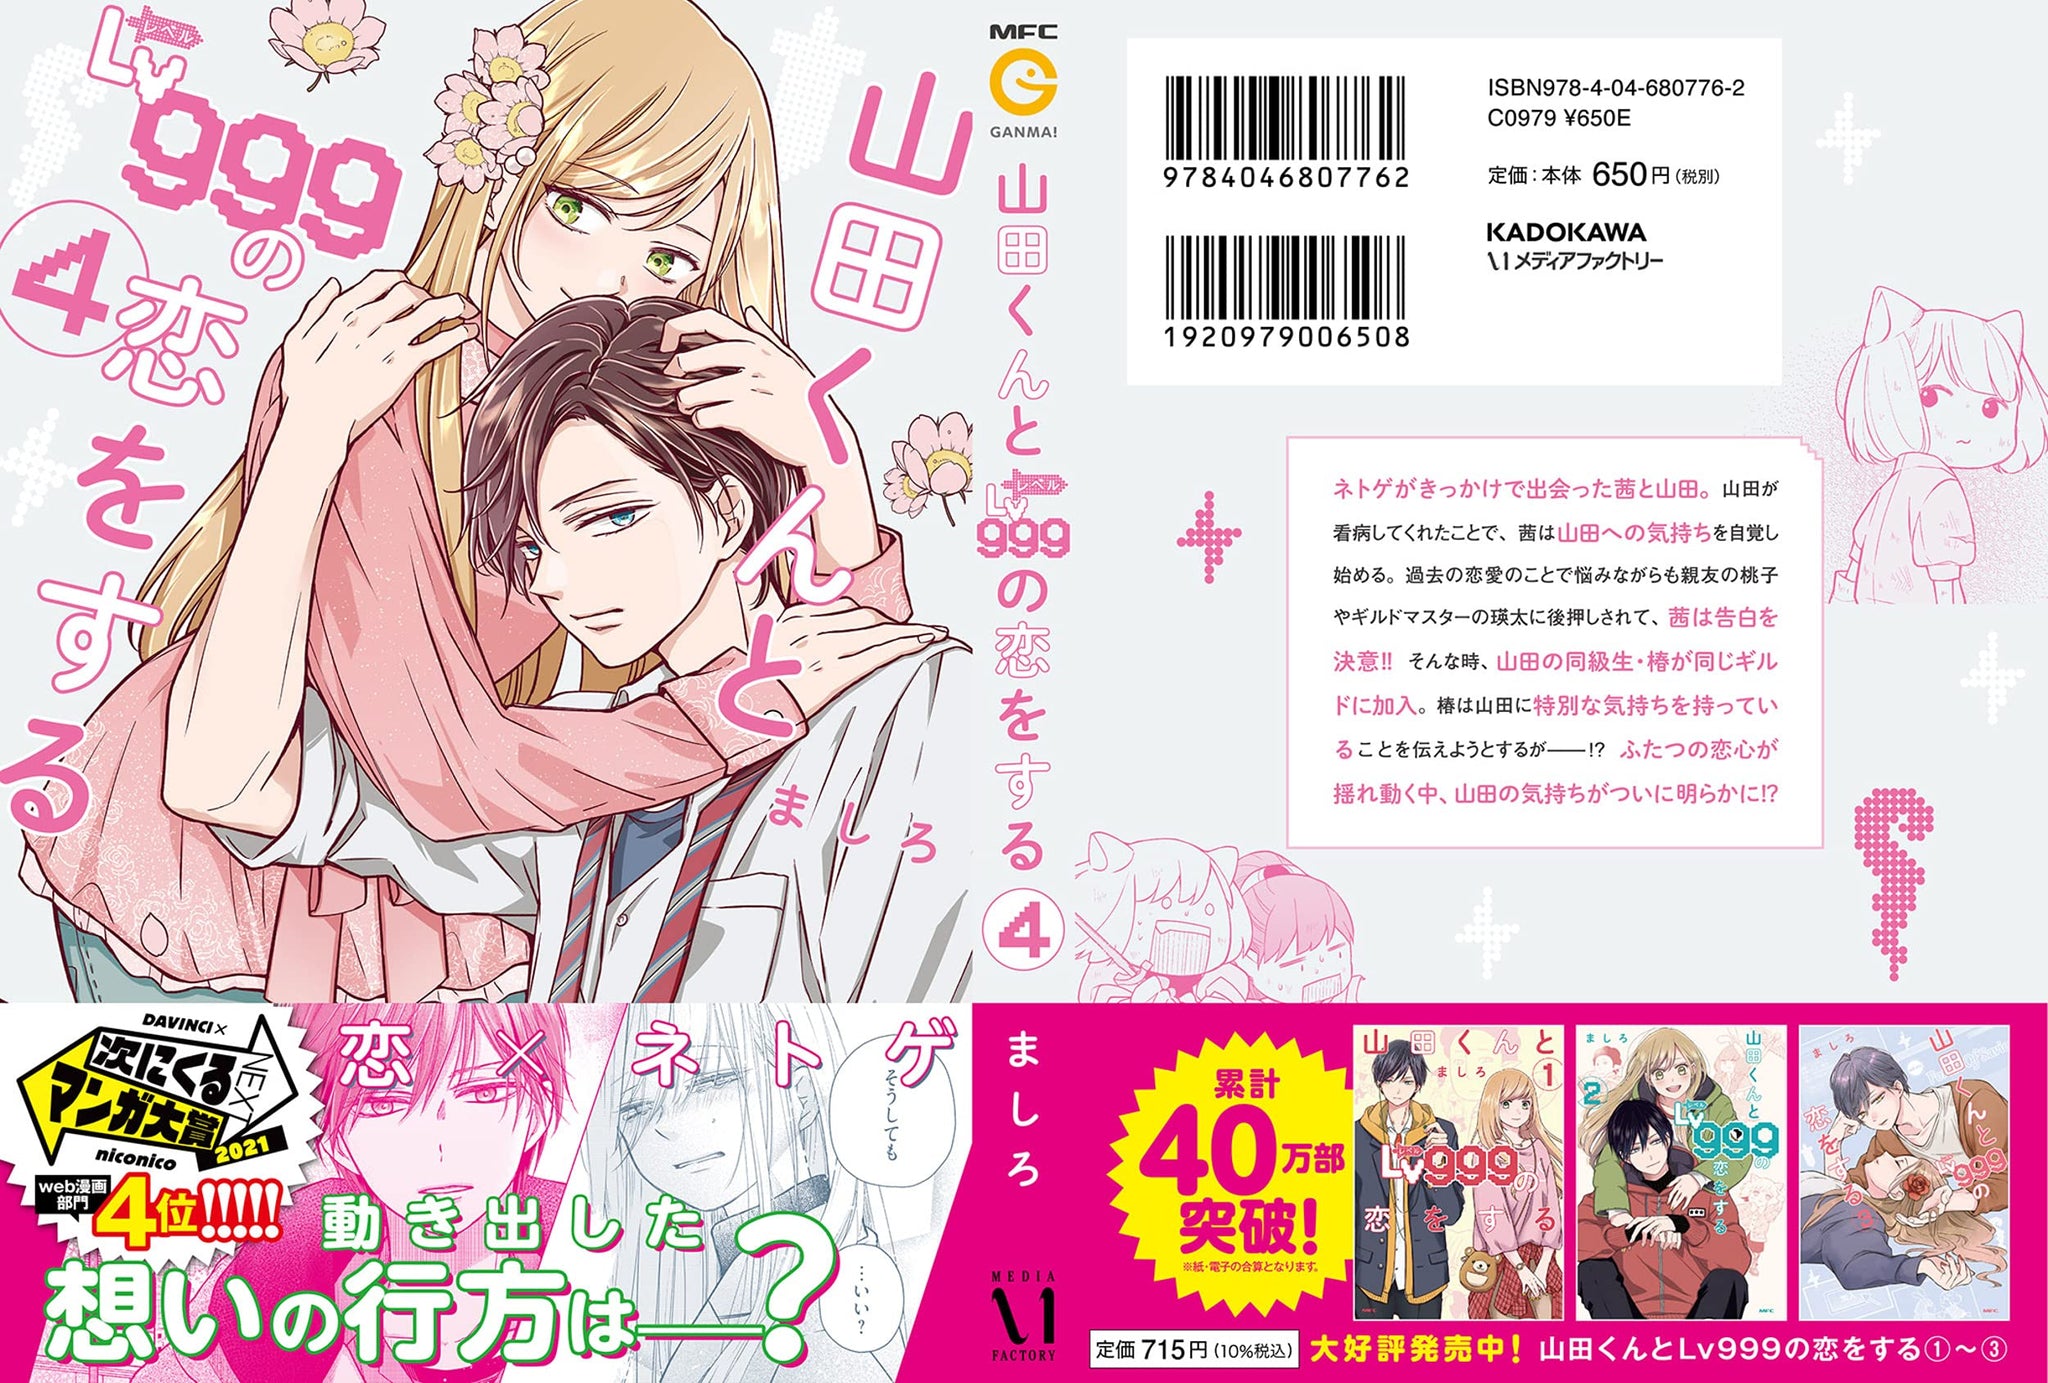 My Love Story with Yamada Kun at lvl 999 anime announced!! : r/manganews